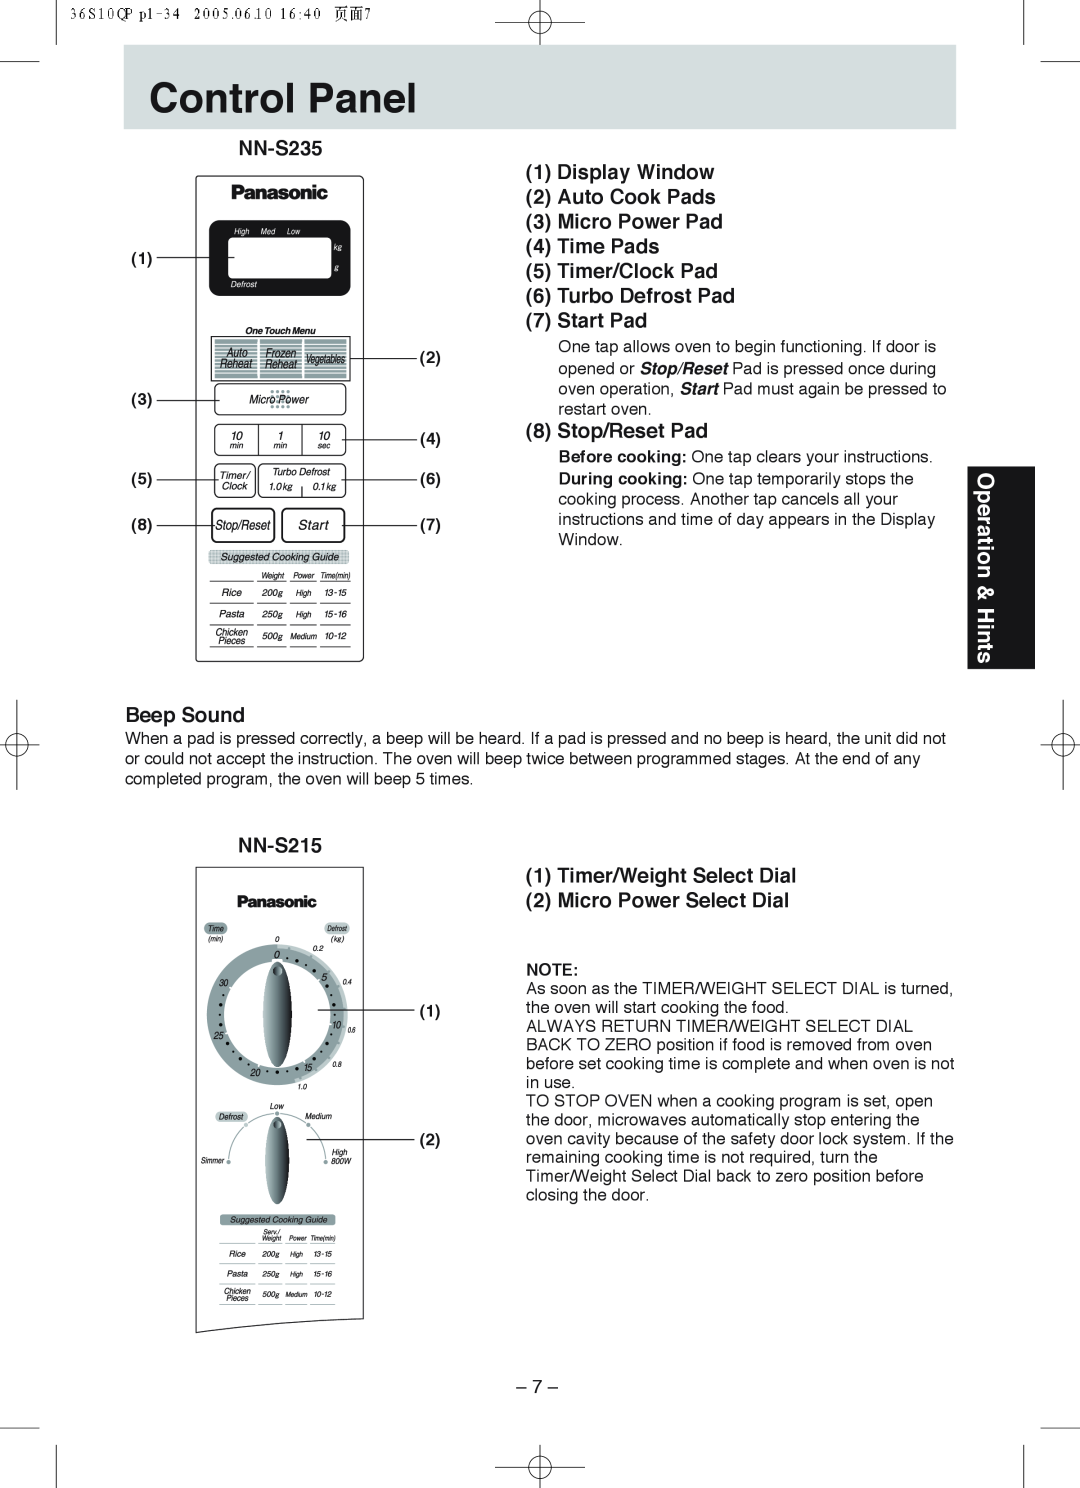 Panasonic NN-S235 Control Panel, Operation & Hints, Display Window, Auto Cook Pads, Micro Power Pad, Time Pads, Start Pad 